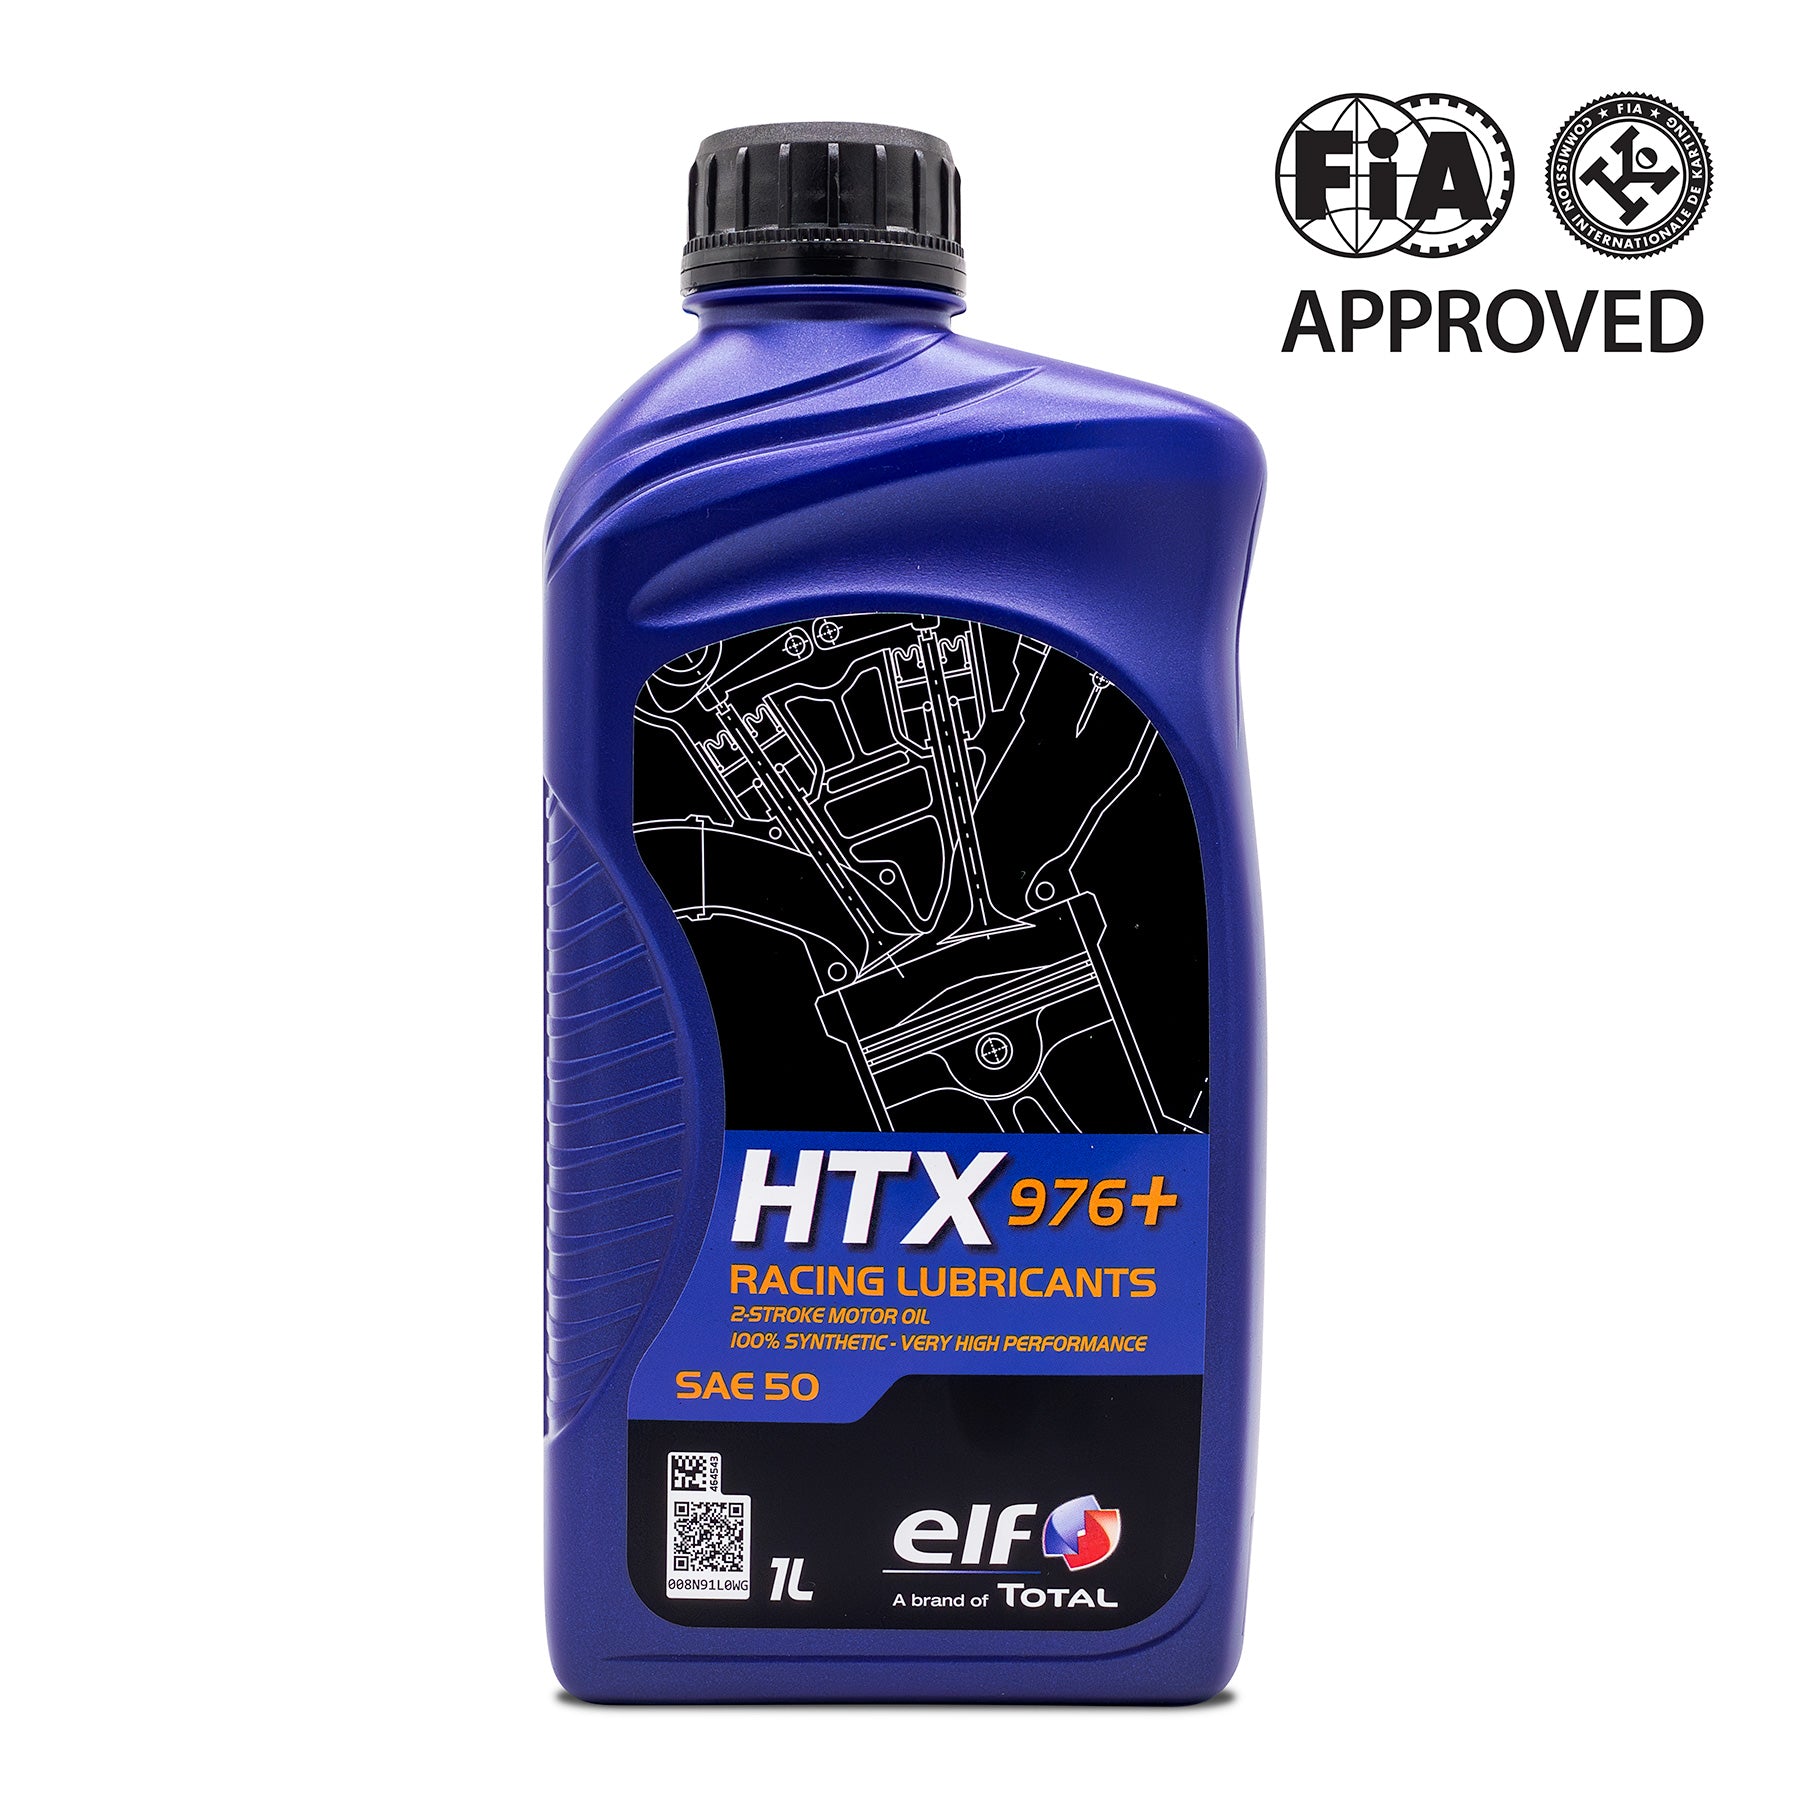 ELF HTX976 Racing Kart Engine Oil. 2-stroke motor oil for go karts